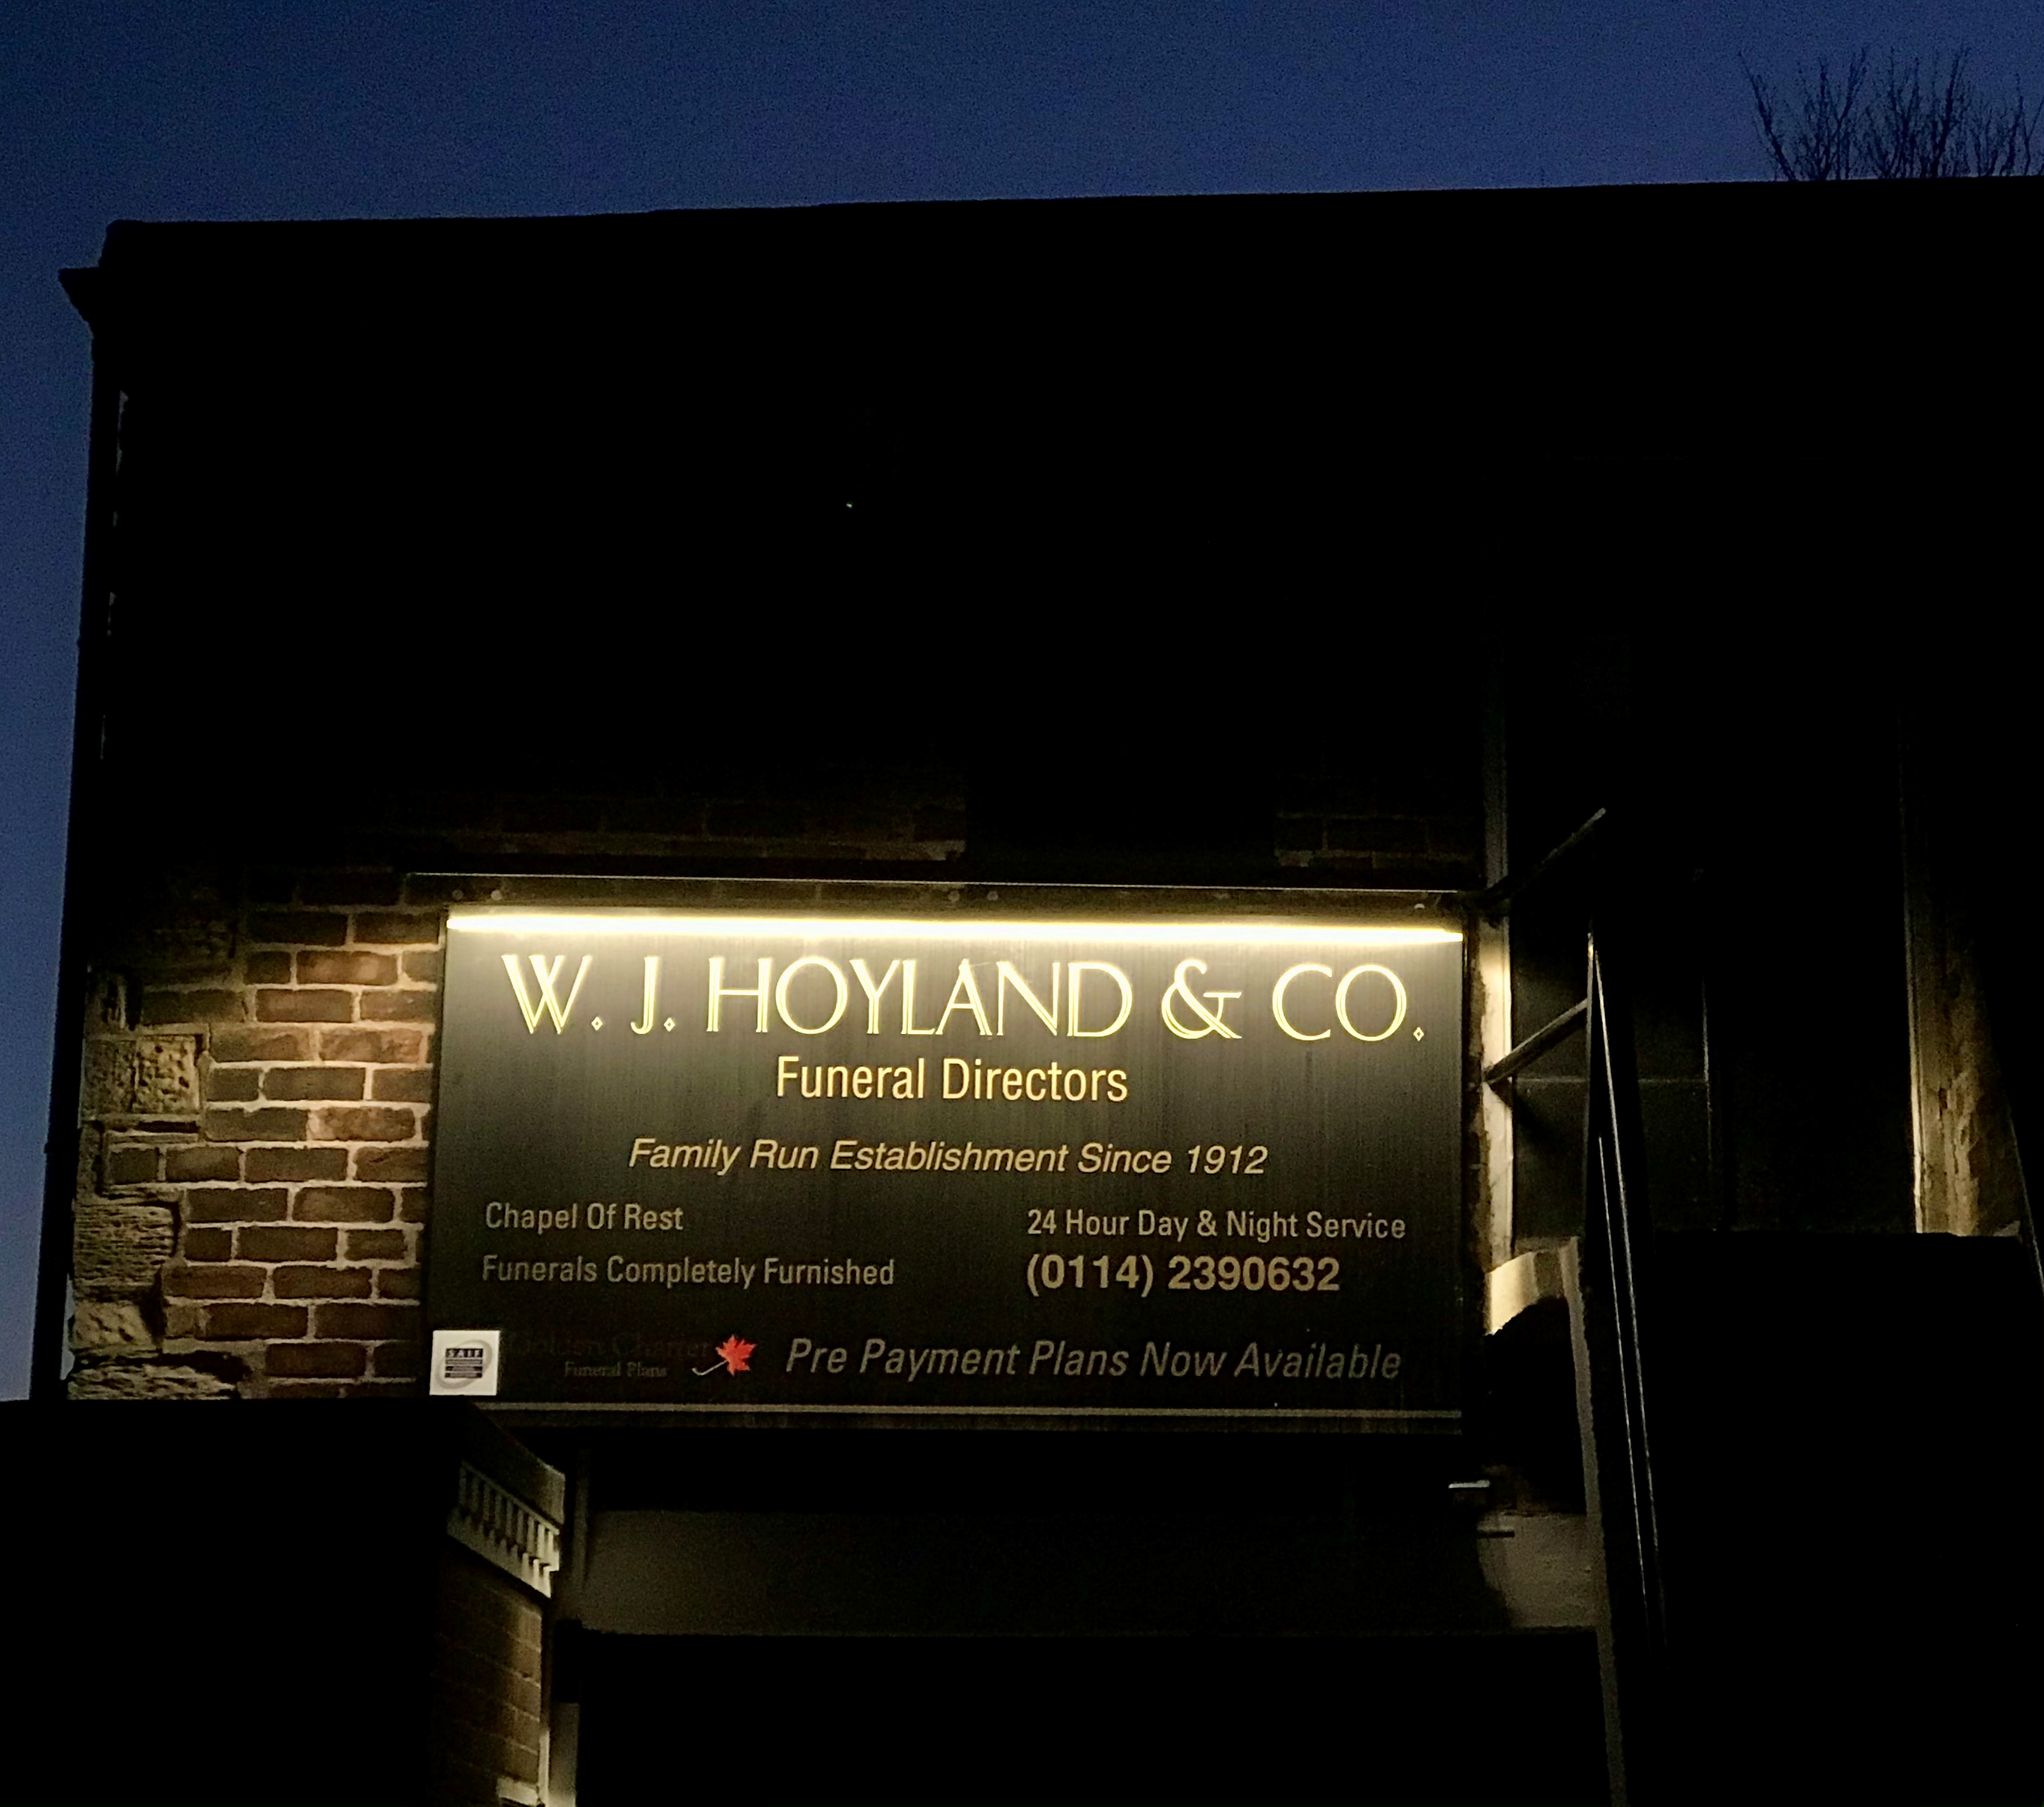 W. J. Hoyland & Co. Funeral Directors